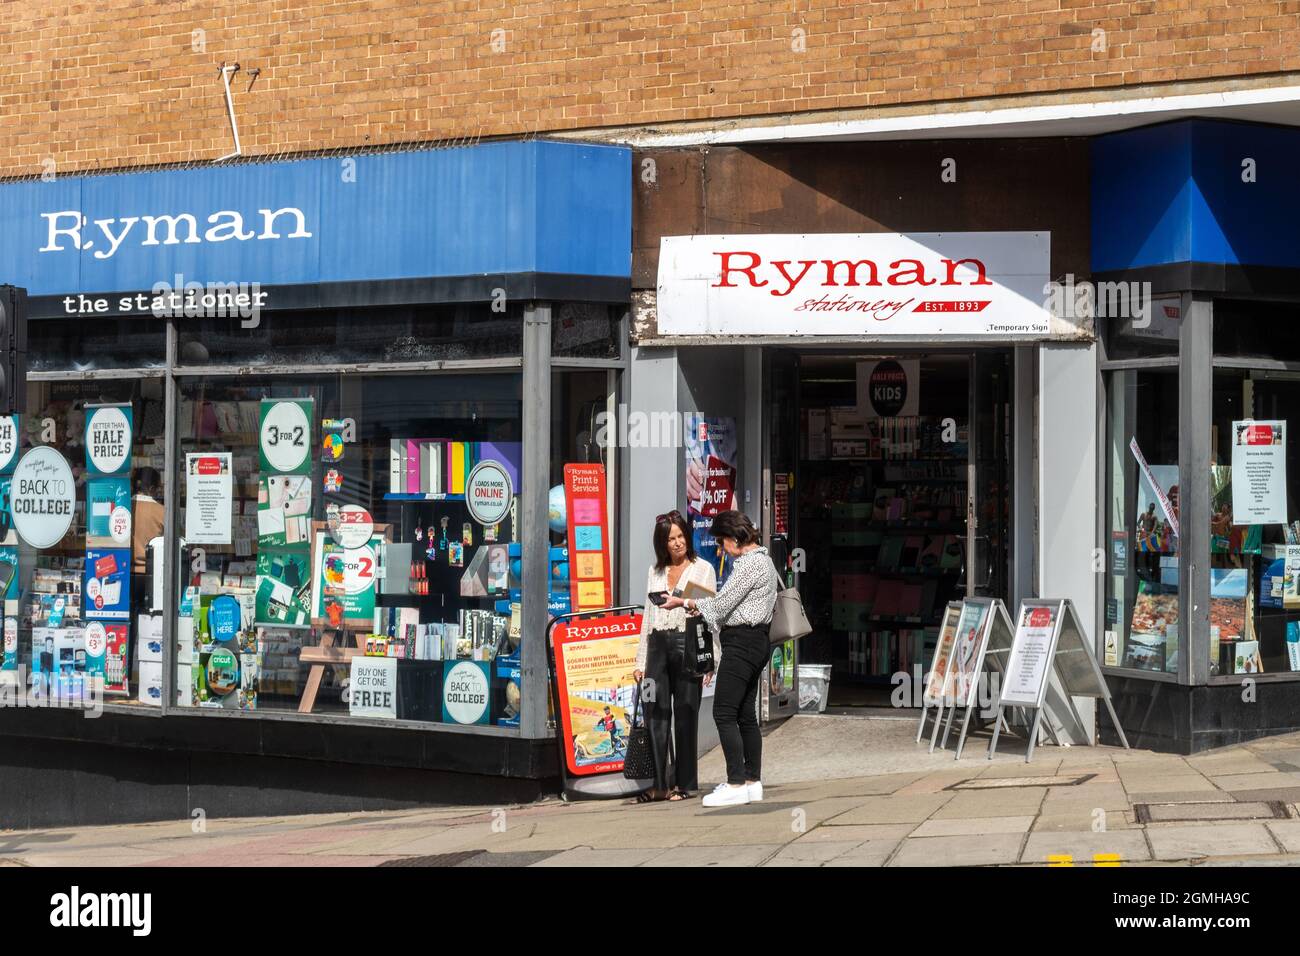 Ryman the Stationer, stationery shop on the high street, England, UK Stock Photo